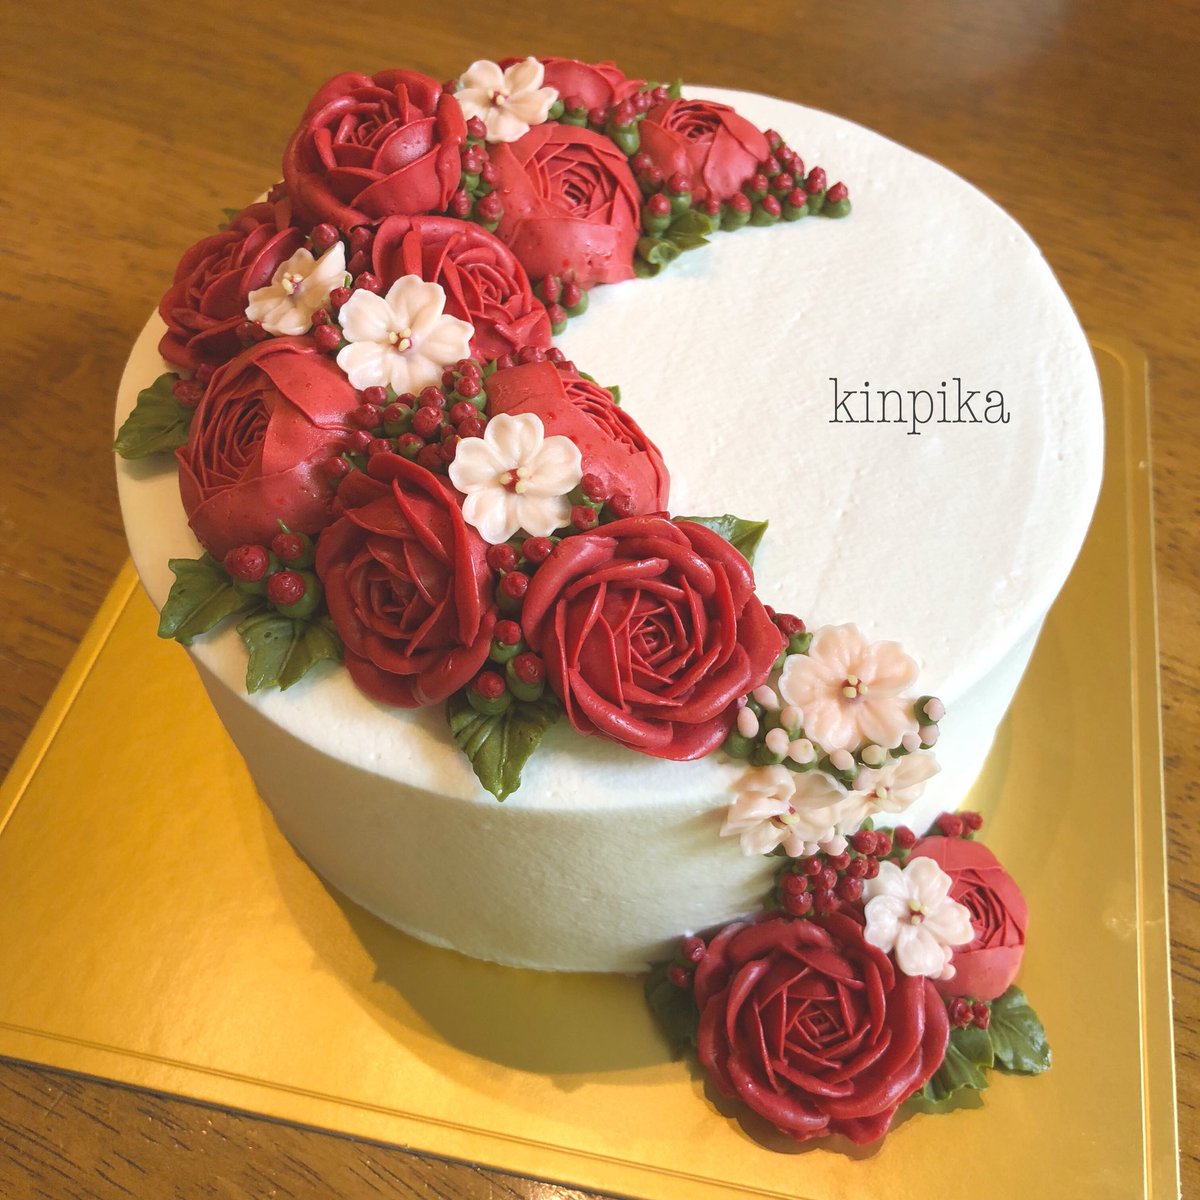 Twitter 上的 きん Miyajima 赤いバラと桜のケーキ 2年前にも赤祭りの日があったなぁ 夏に突如訪れる赤の日 毎年楽しみになってしまいます フラワーケーキ 安曇野 Cakeworks Kinpika T Co P6u2kumj Twitter